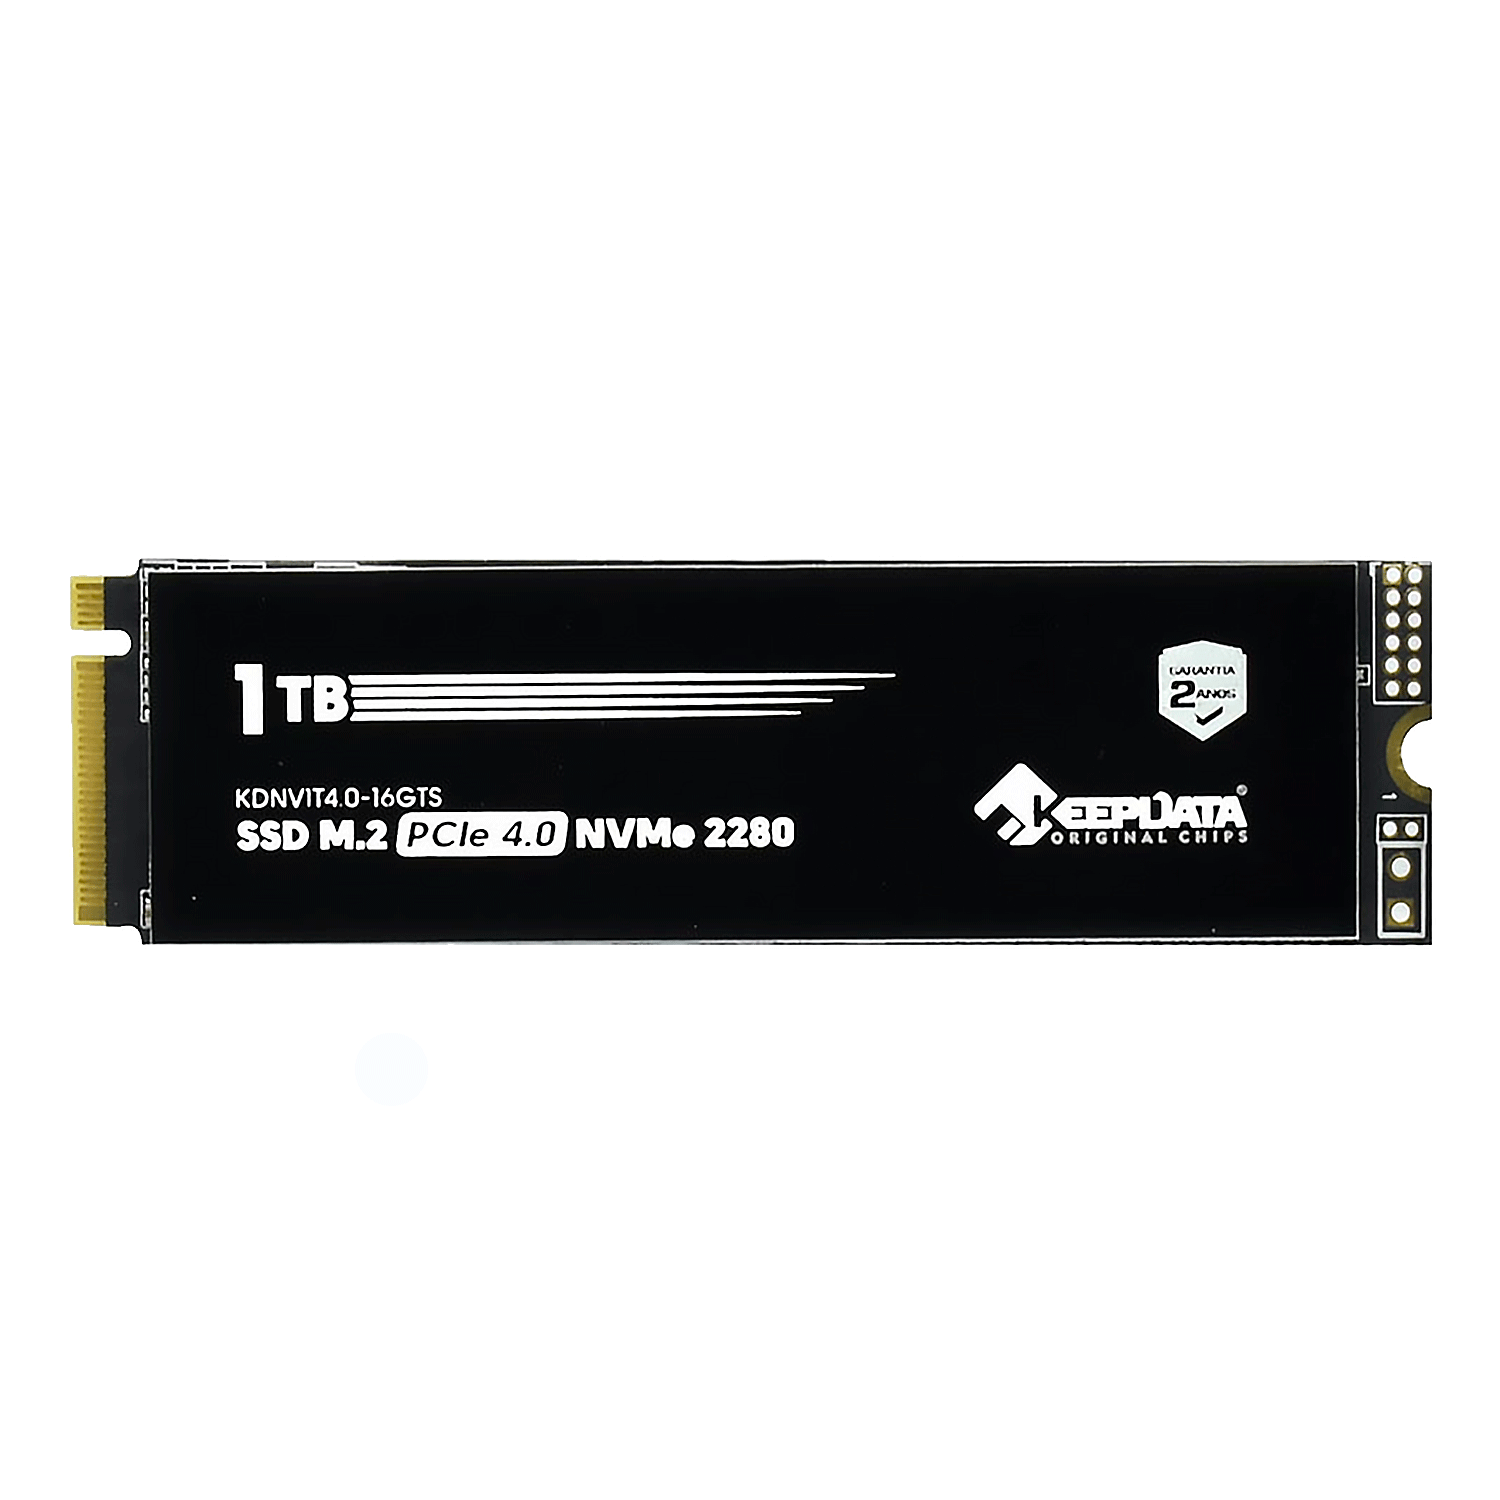 SSD M.2 Keepdata 1TB NVMe PCIe 4.0 - KDNV1T4.0-16GTS